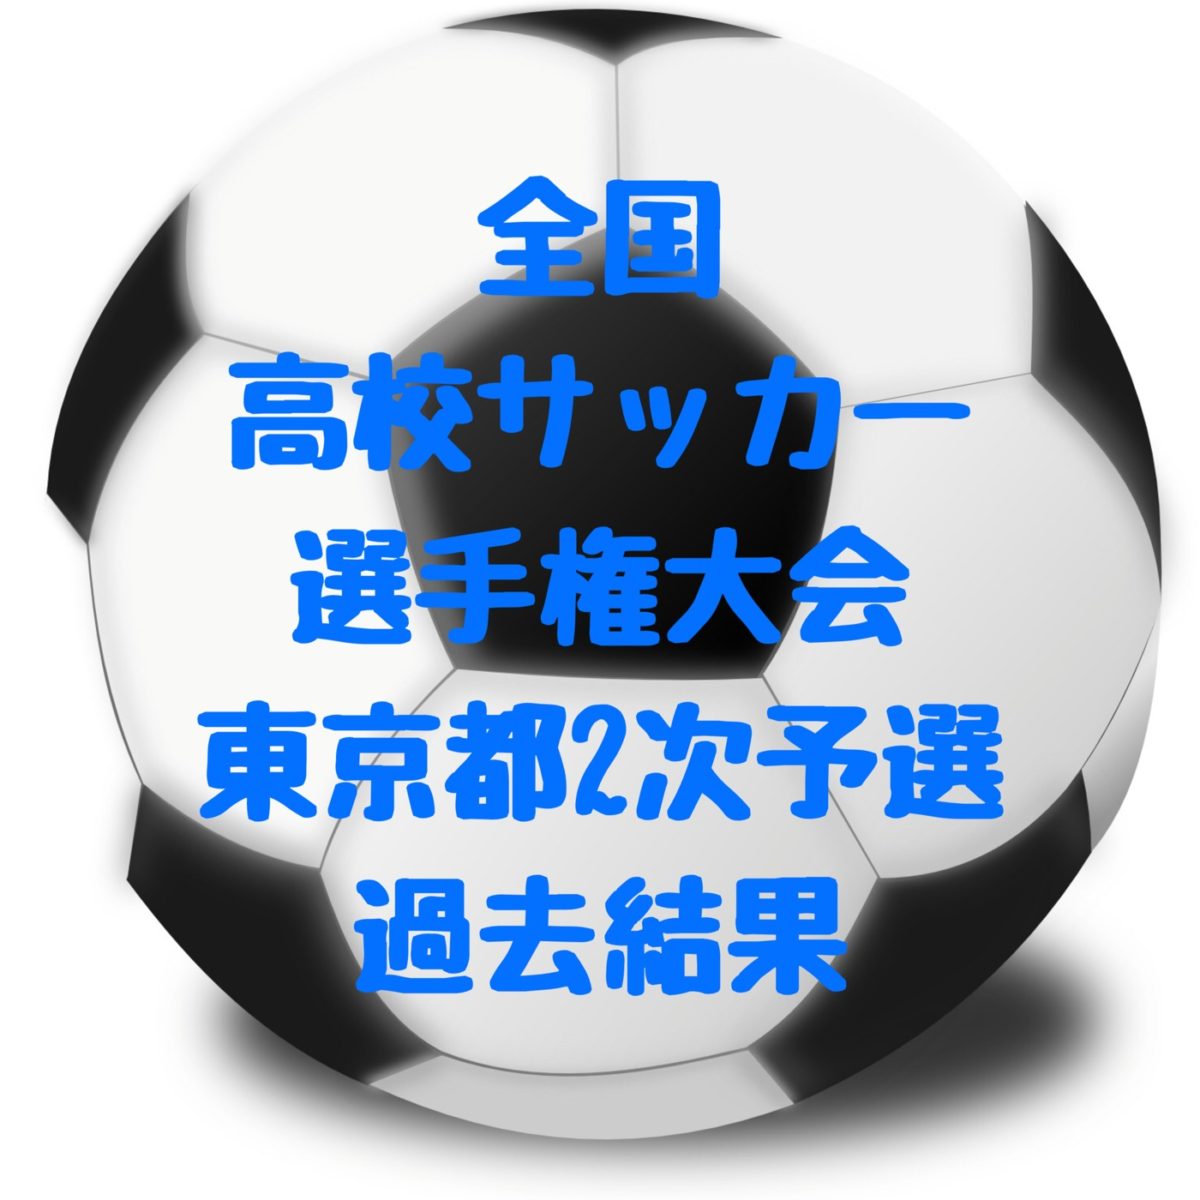 予選 サッカー 東京 全国 選手権 高校